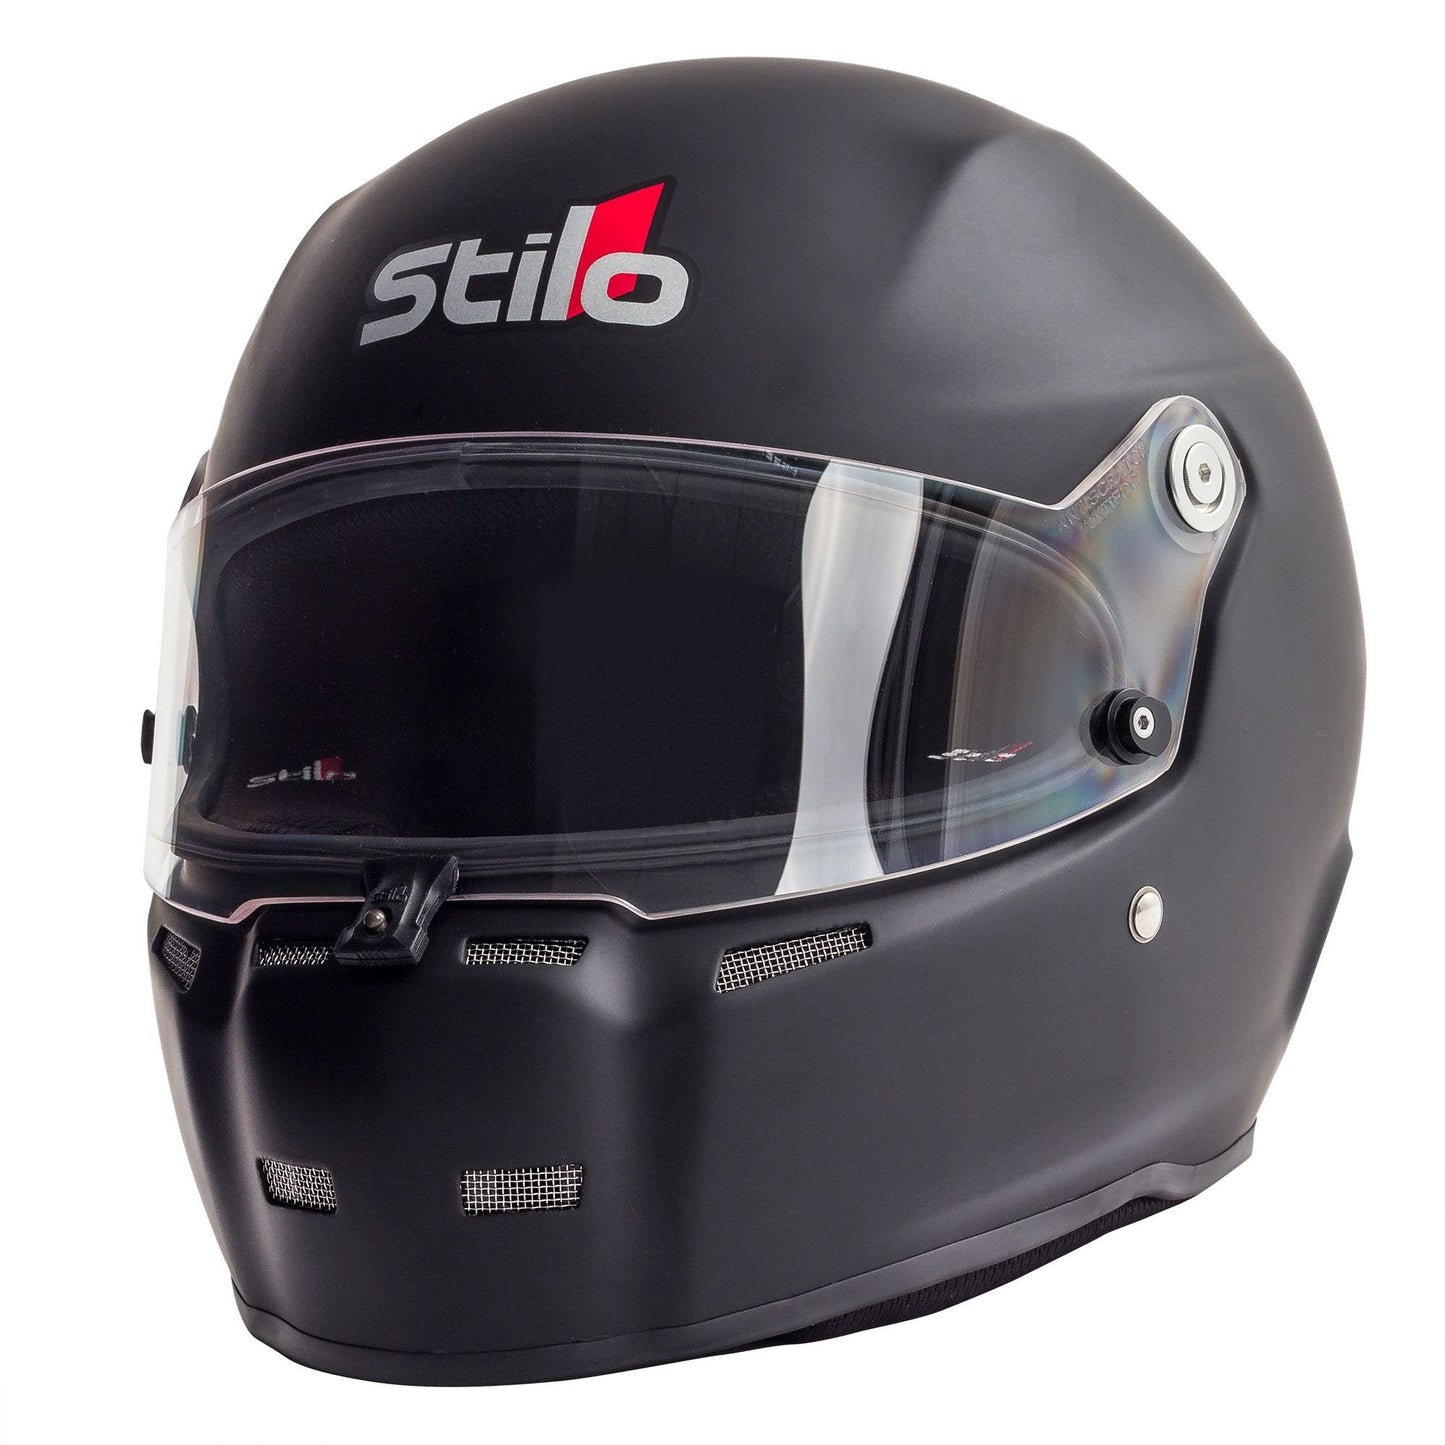 Stilo Karting CMR helmet